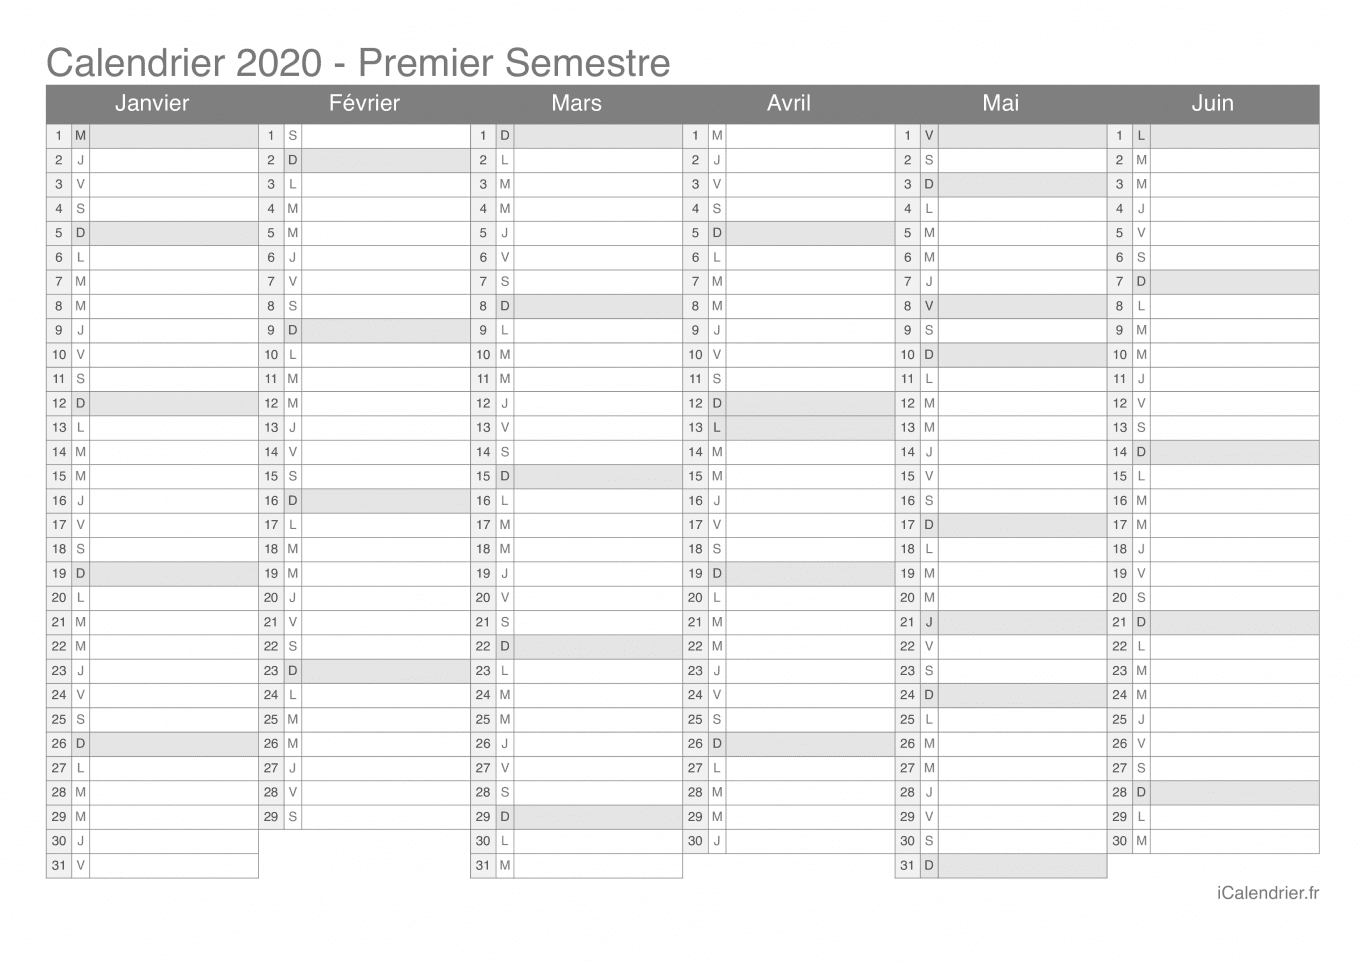 Calendrier par semestre 2020